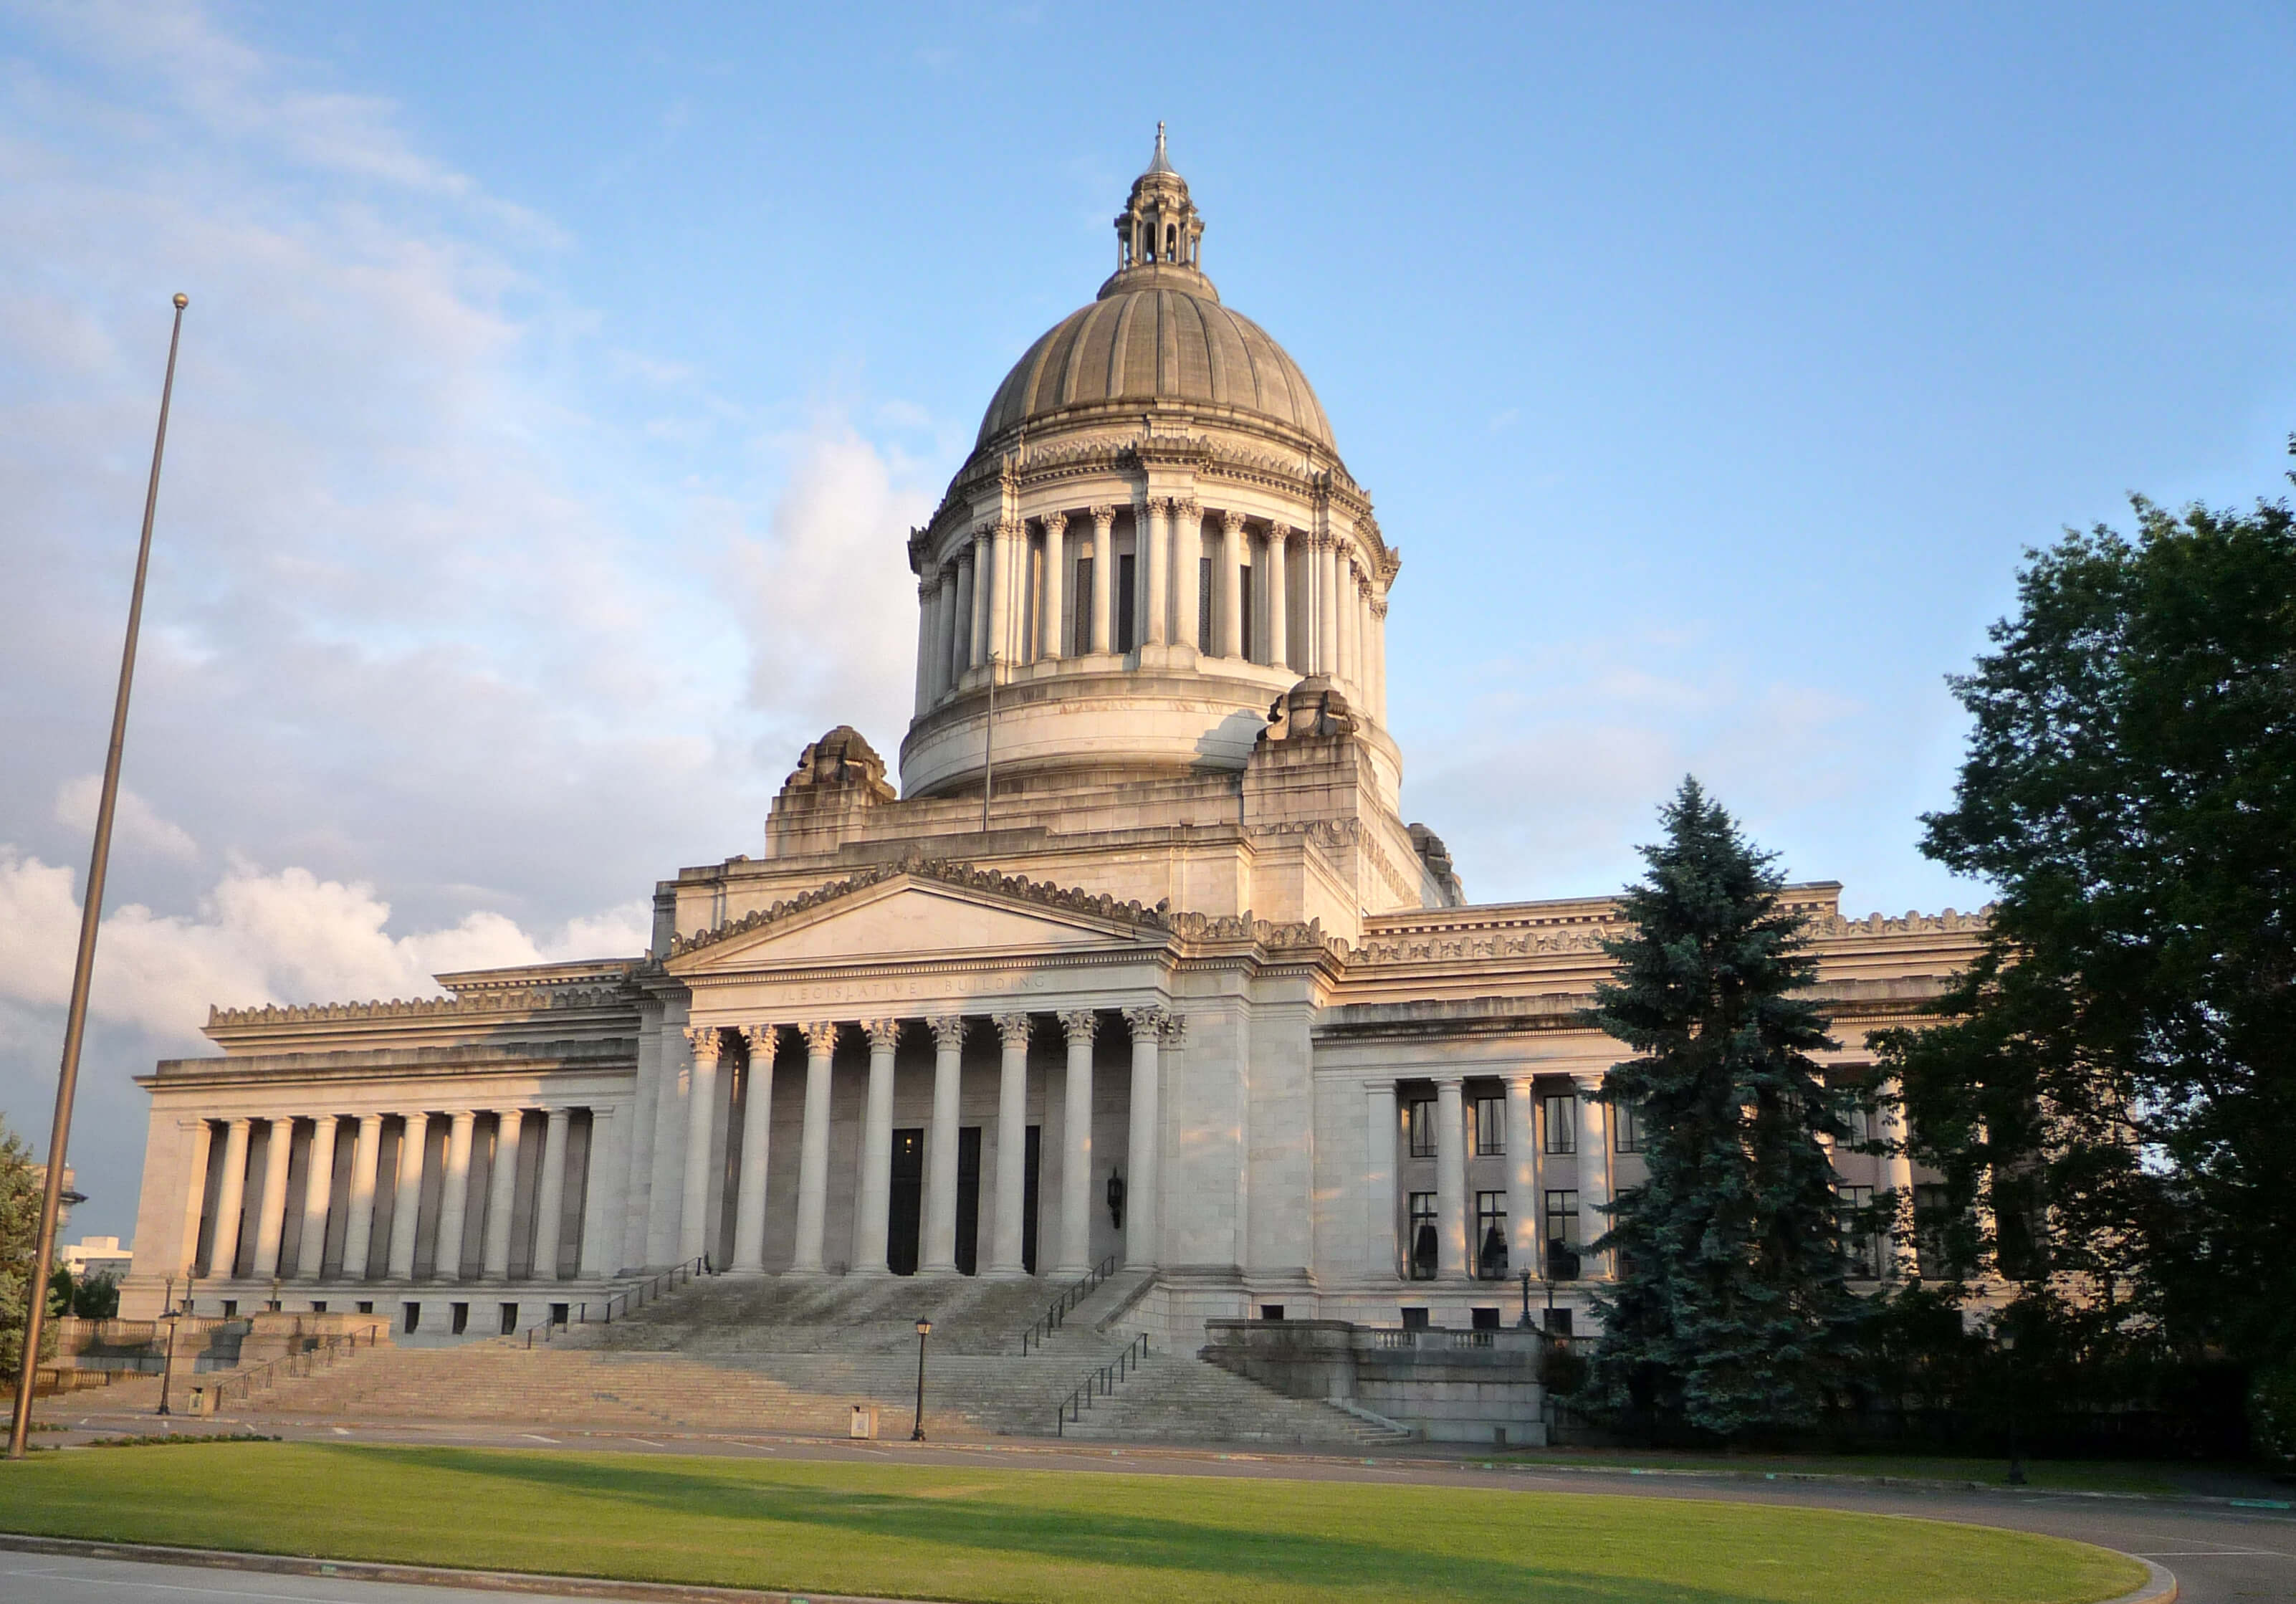 Washington State Legislative Update